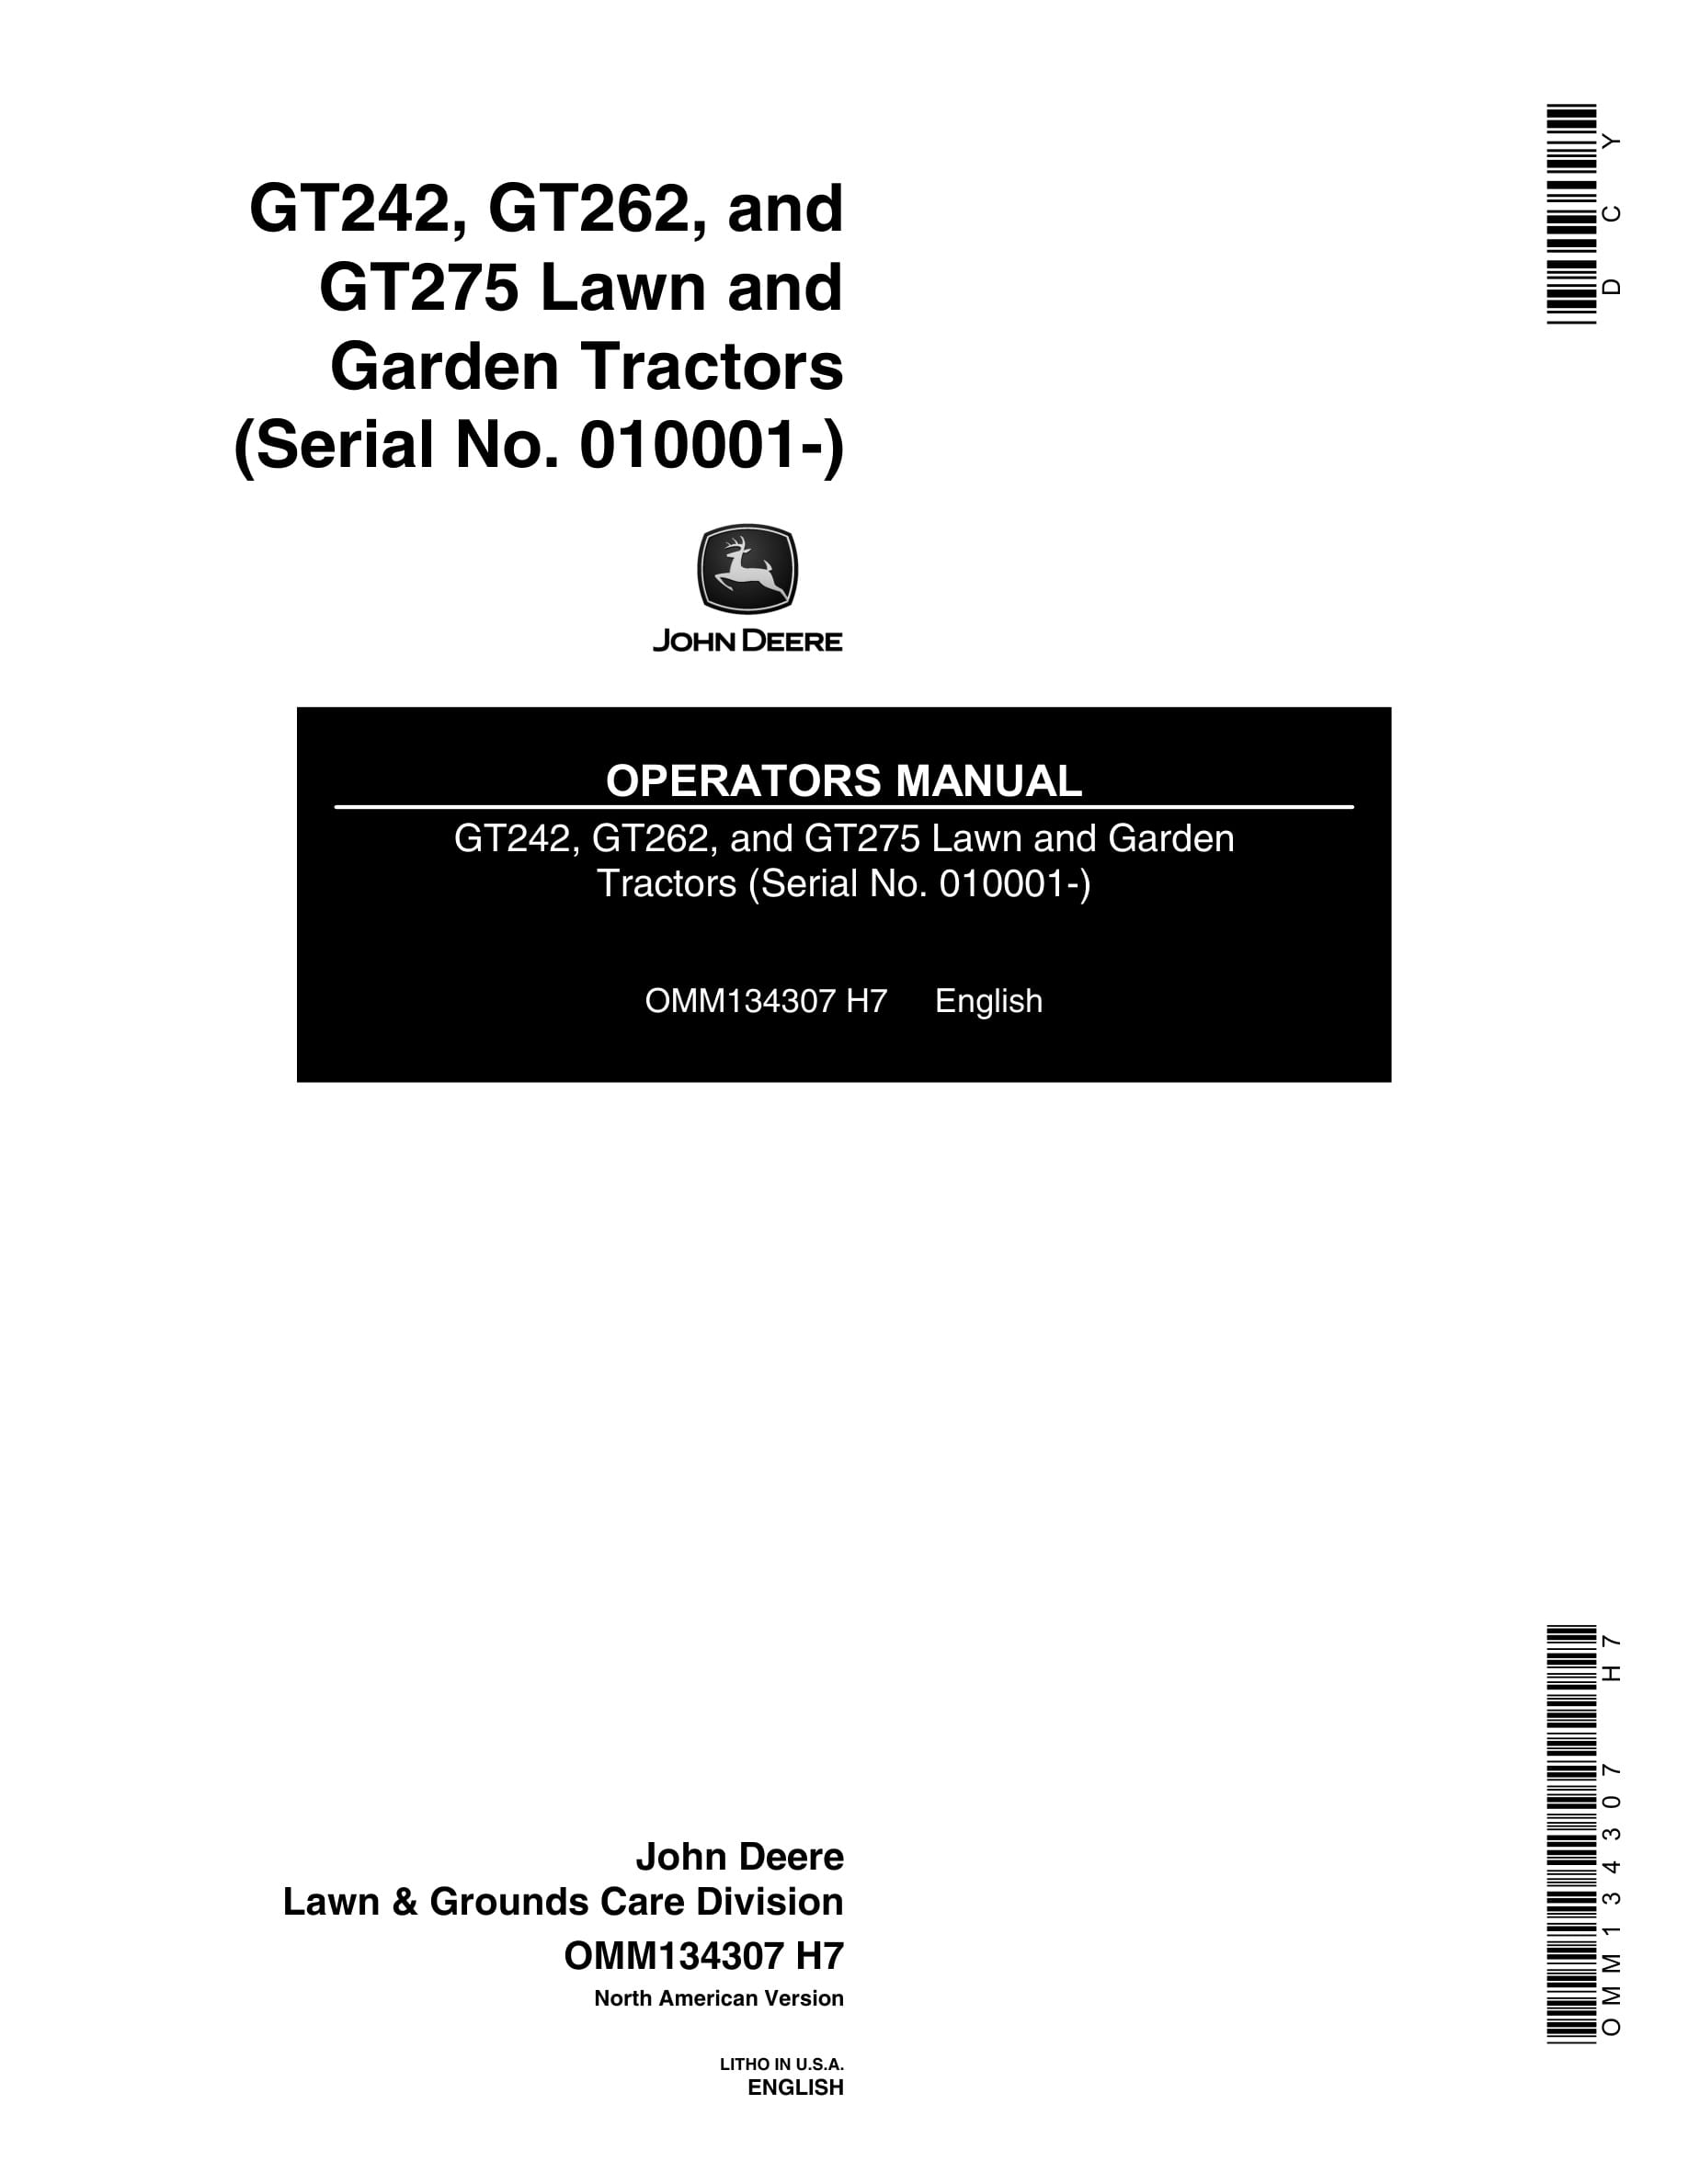 John Deere GT242, GT262, and GT275 Tractor Operator Manual OMM134307-1